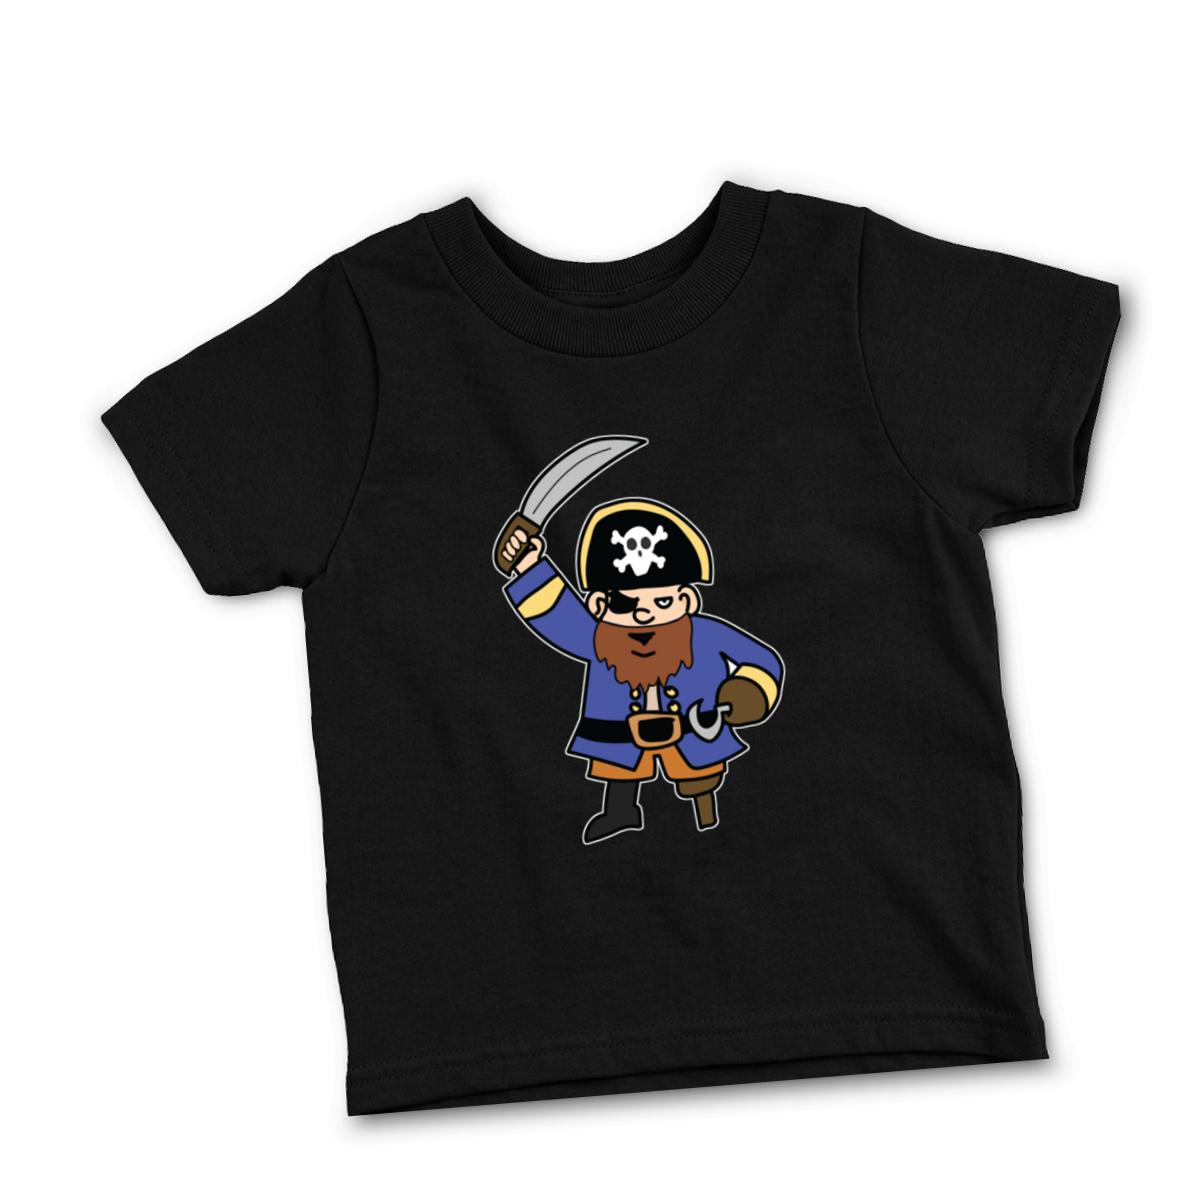 Pirate Infant Tee 12M black